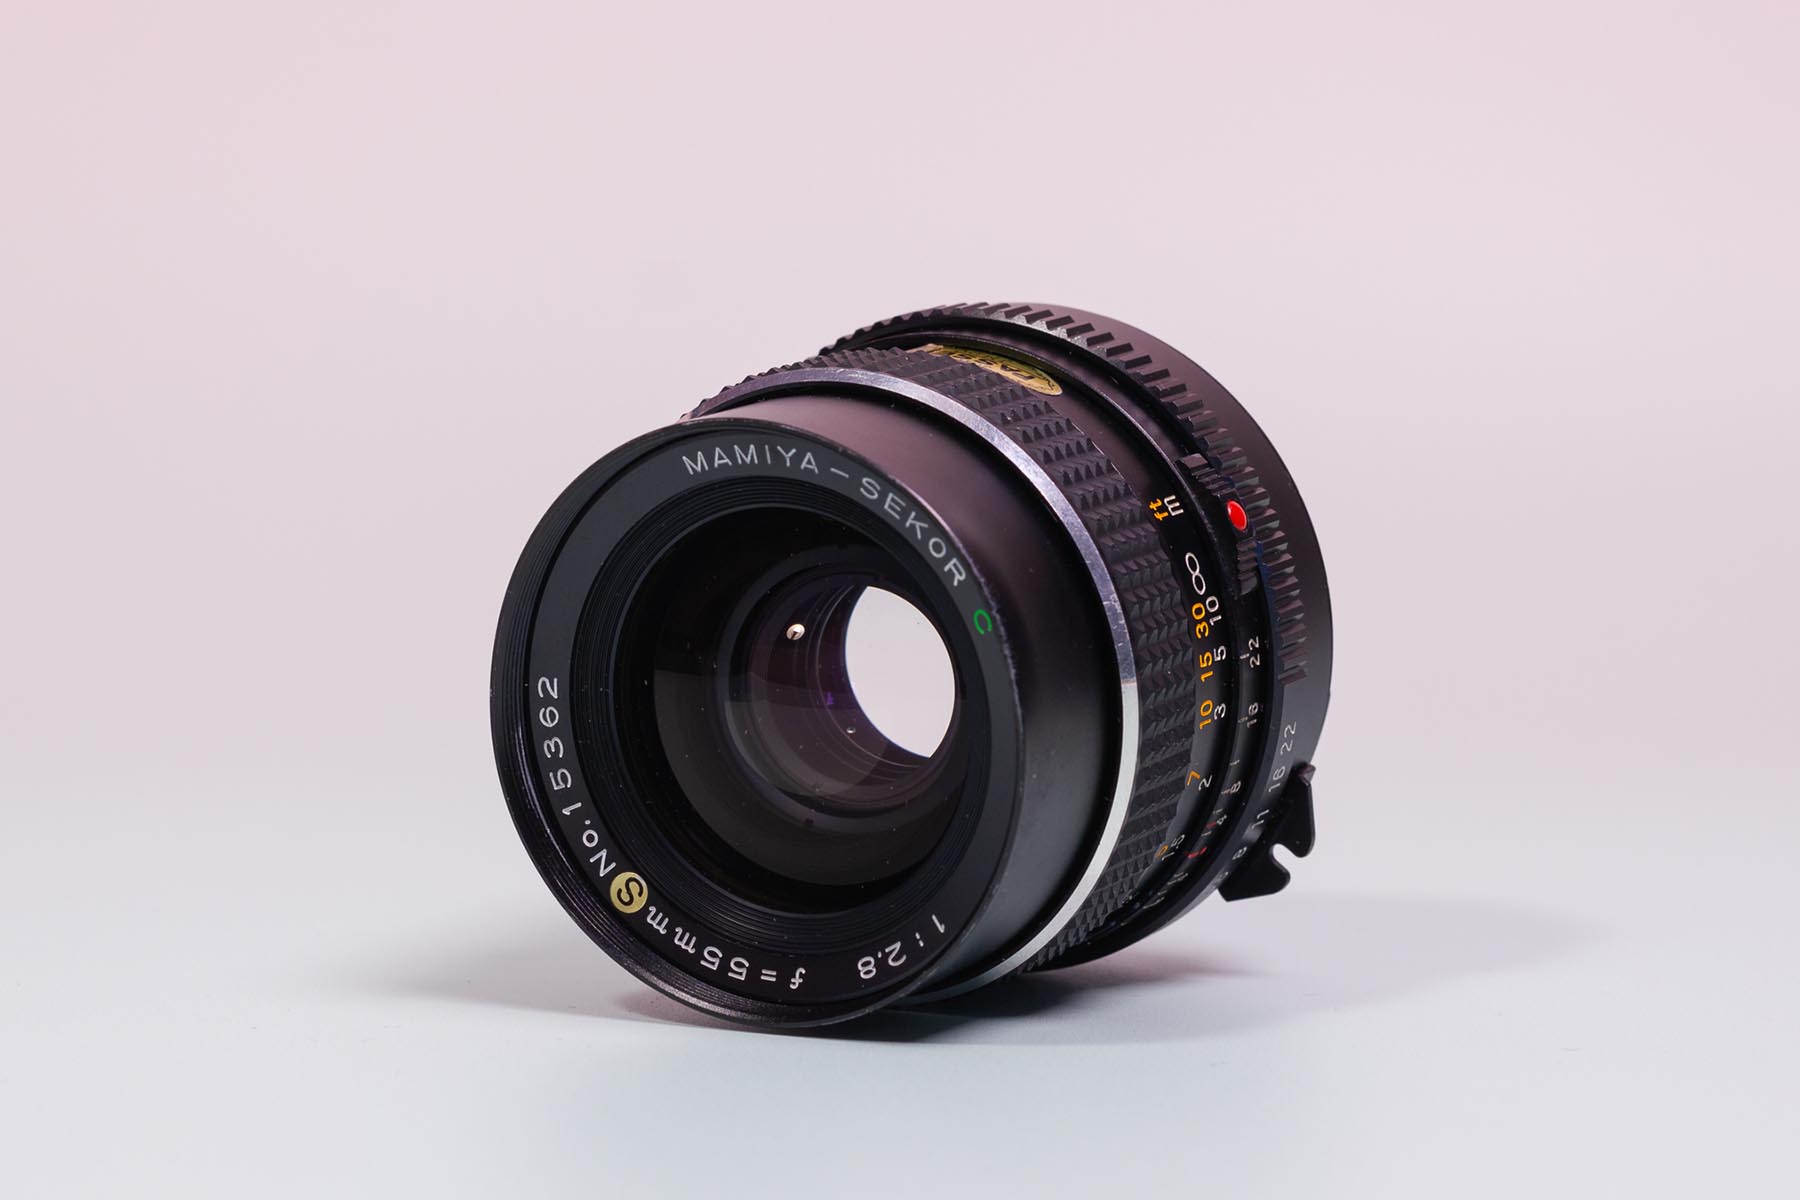 Mamiya 645 Sekor C S 55mm f2.8 lens